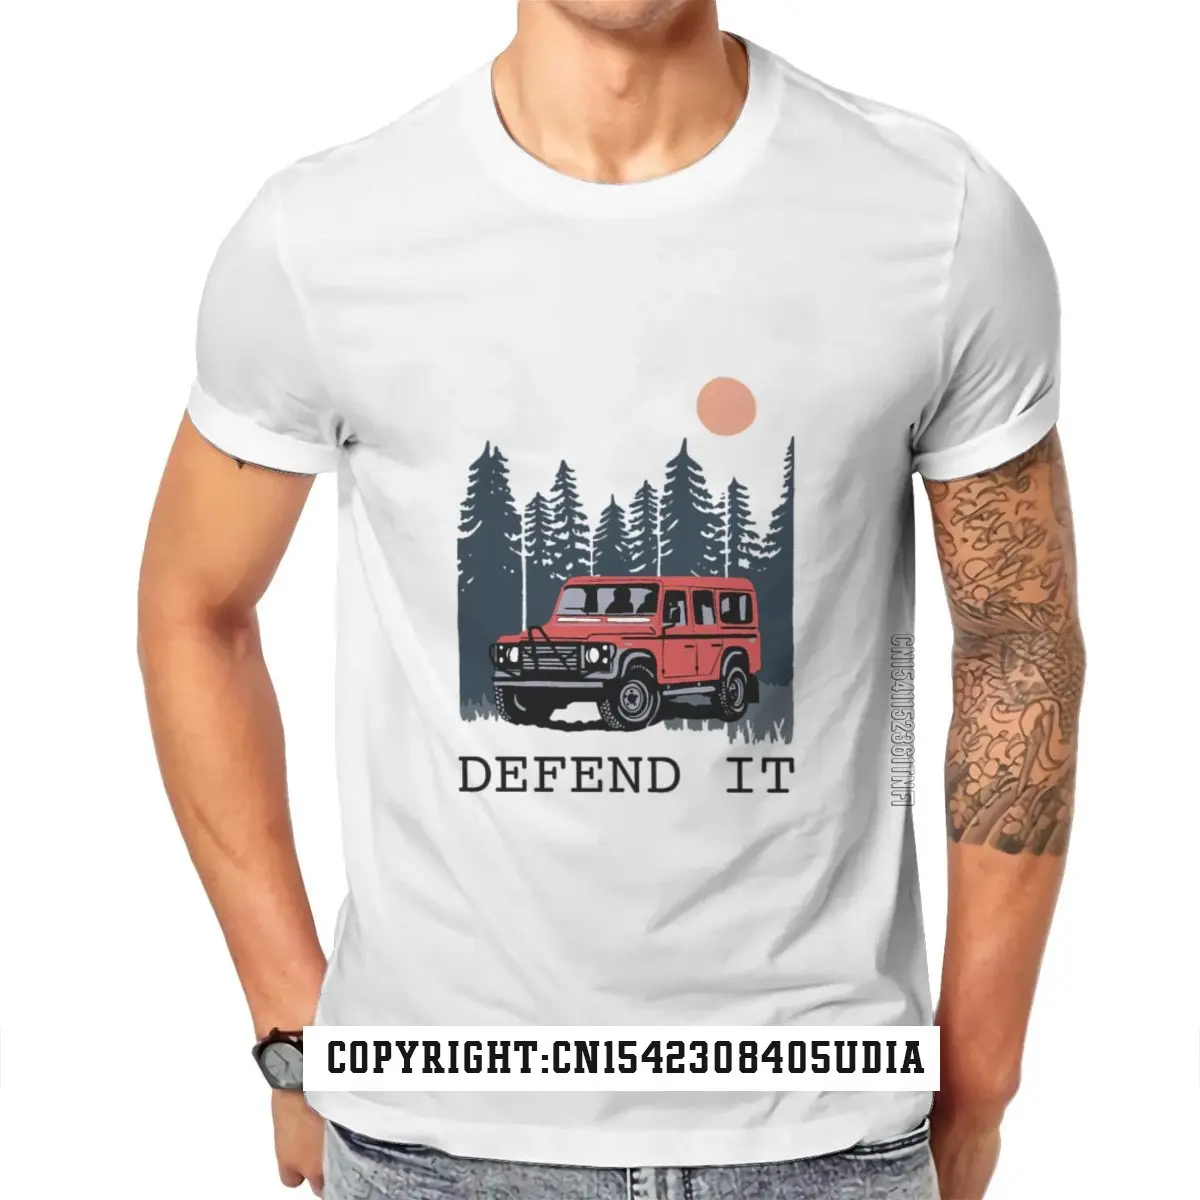 Defend It Unisex Super Soft T-Shirt Red Pink Gothic Unisex Male Clothing 92121 Prevailing T Shirt Cotton Men Tops T Shirt Summer